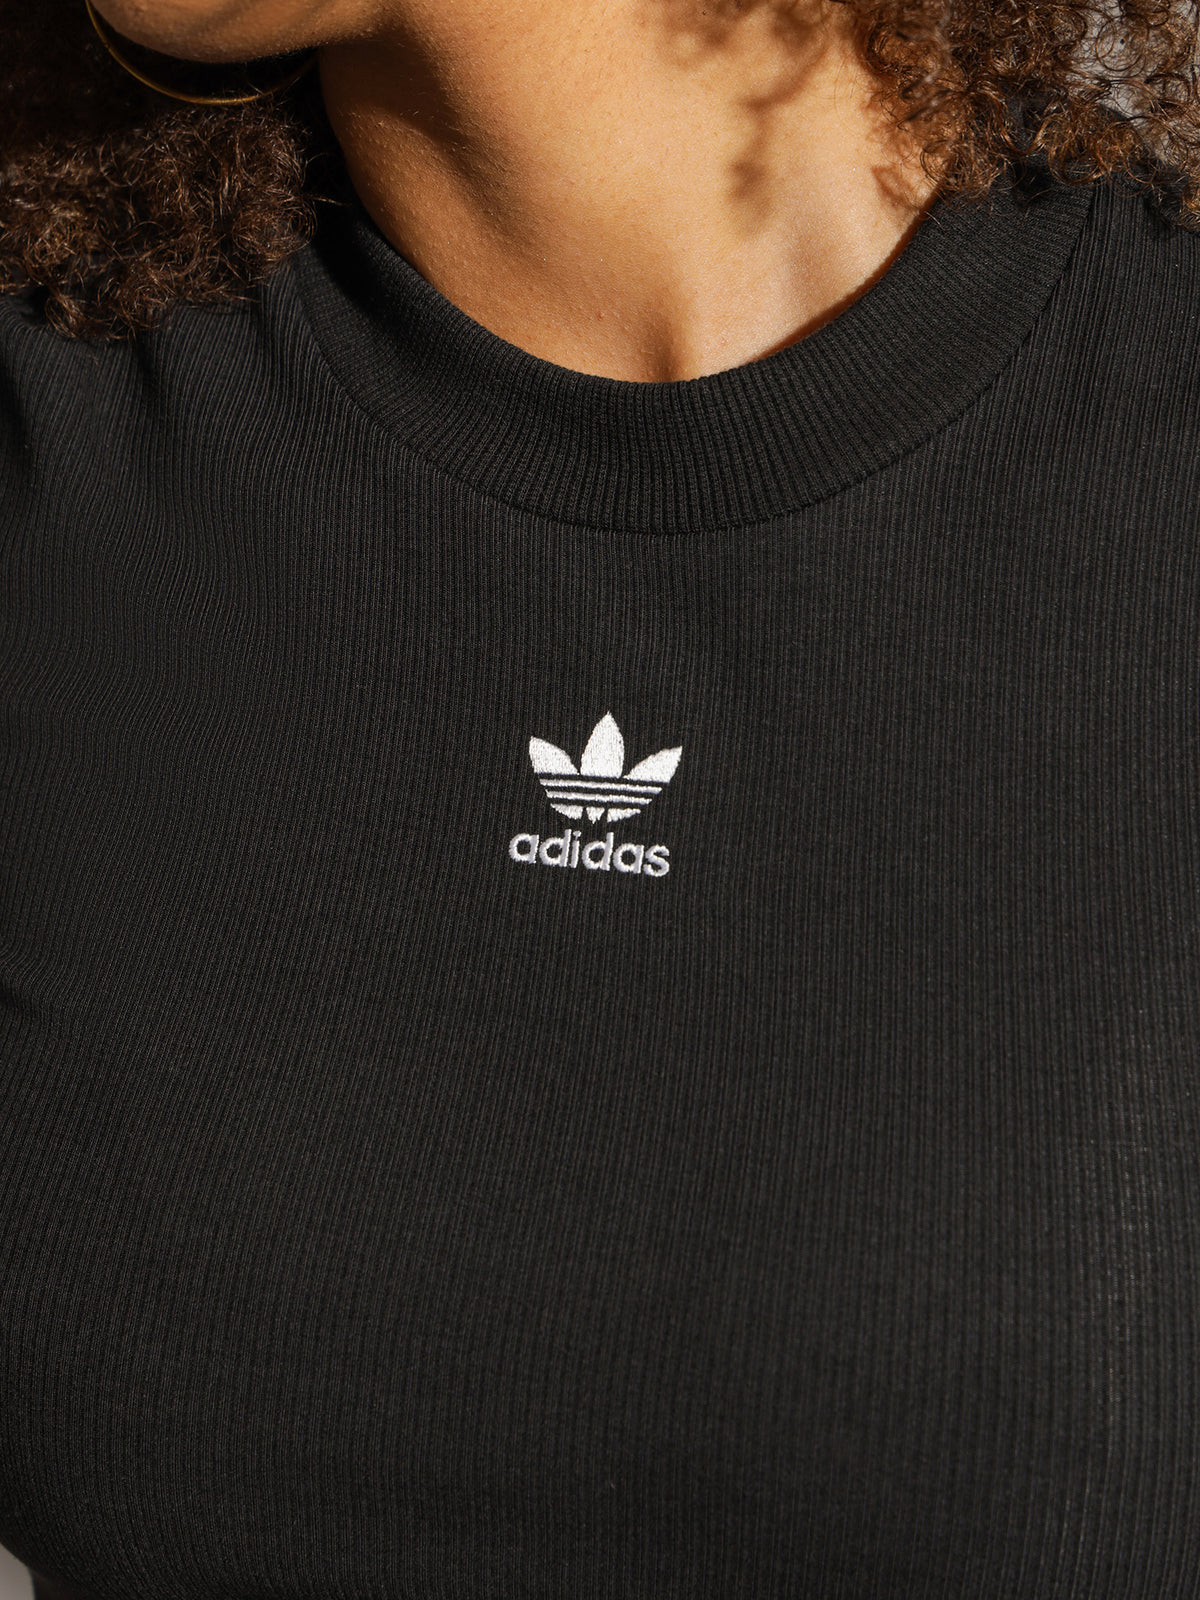 Adidas Cropped Rib Baby T-Shirt in Black